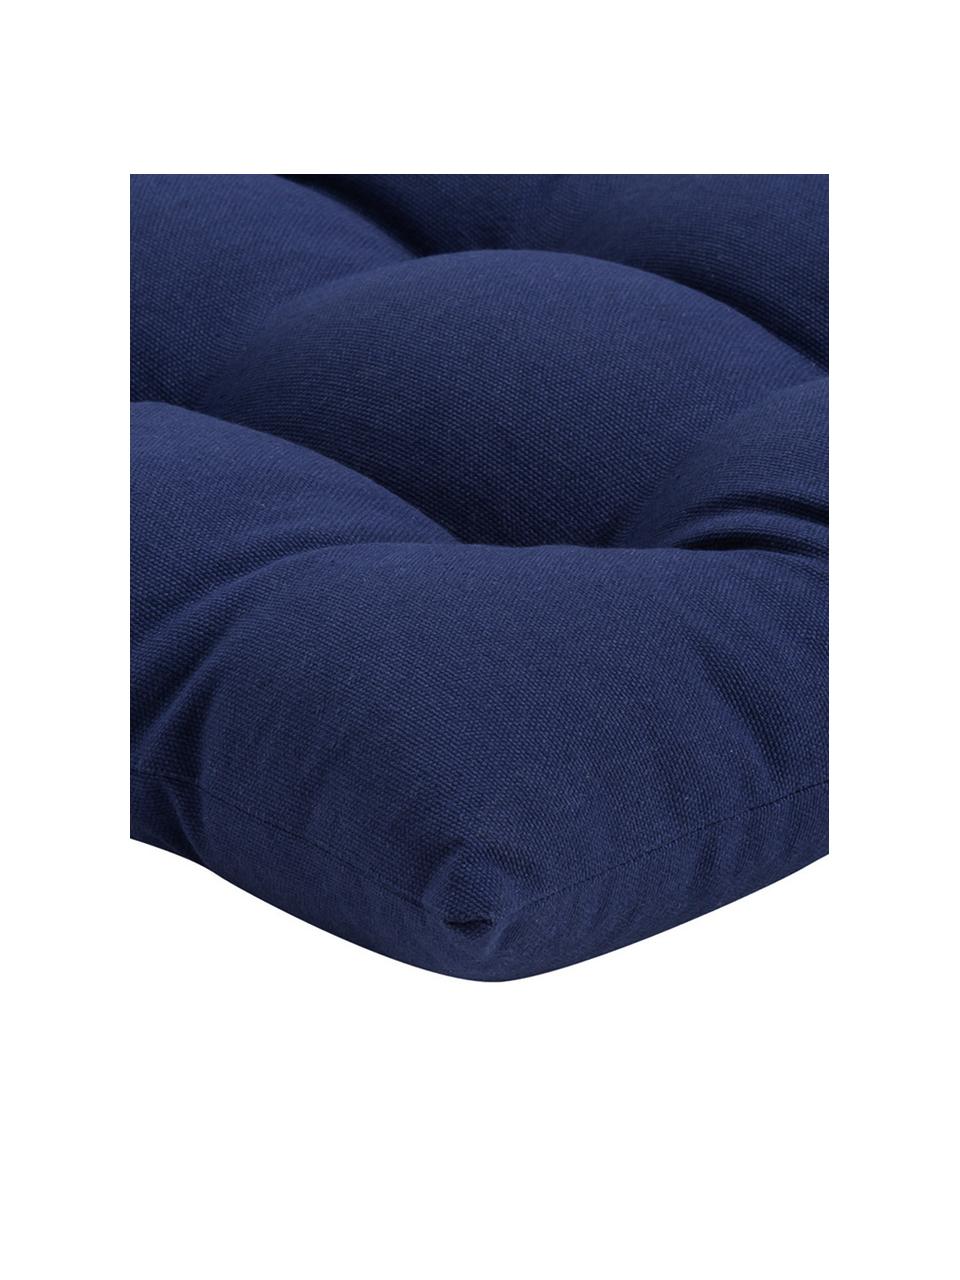 Katoenen stoelkussen Ava in marineblauw, Marineblauw, B 40 x L 40 cm